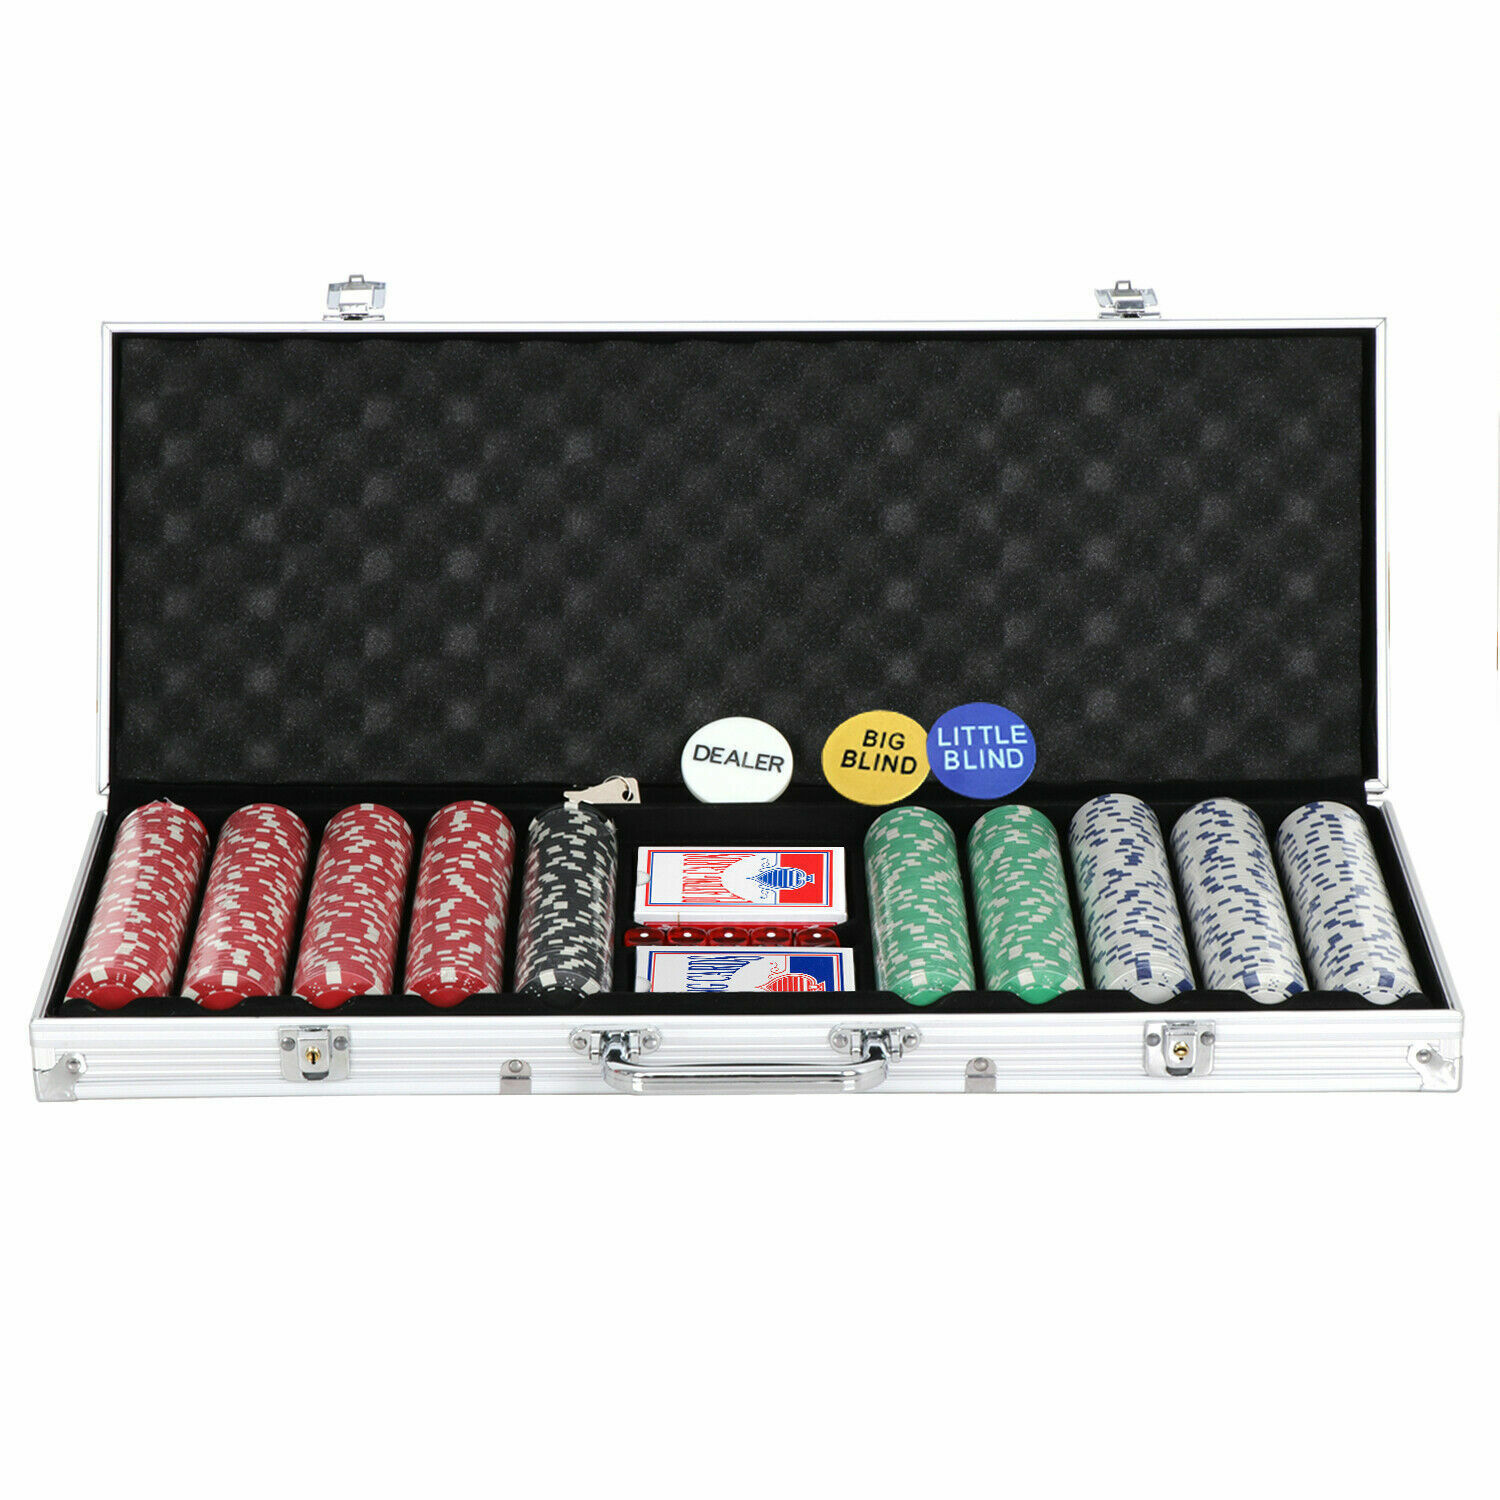 Chips Poker Dice Chip Set Texas Blackjack Cards Game w/ Aluminum Case 500PCS